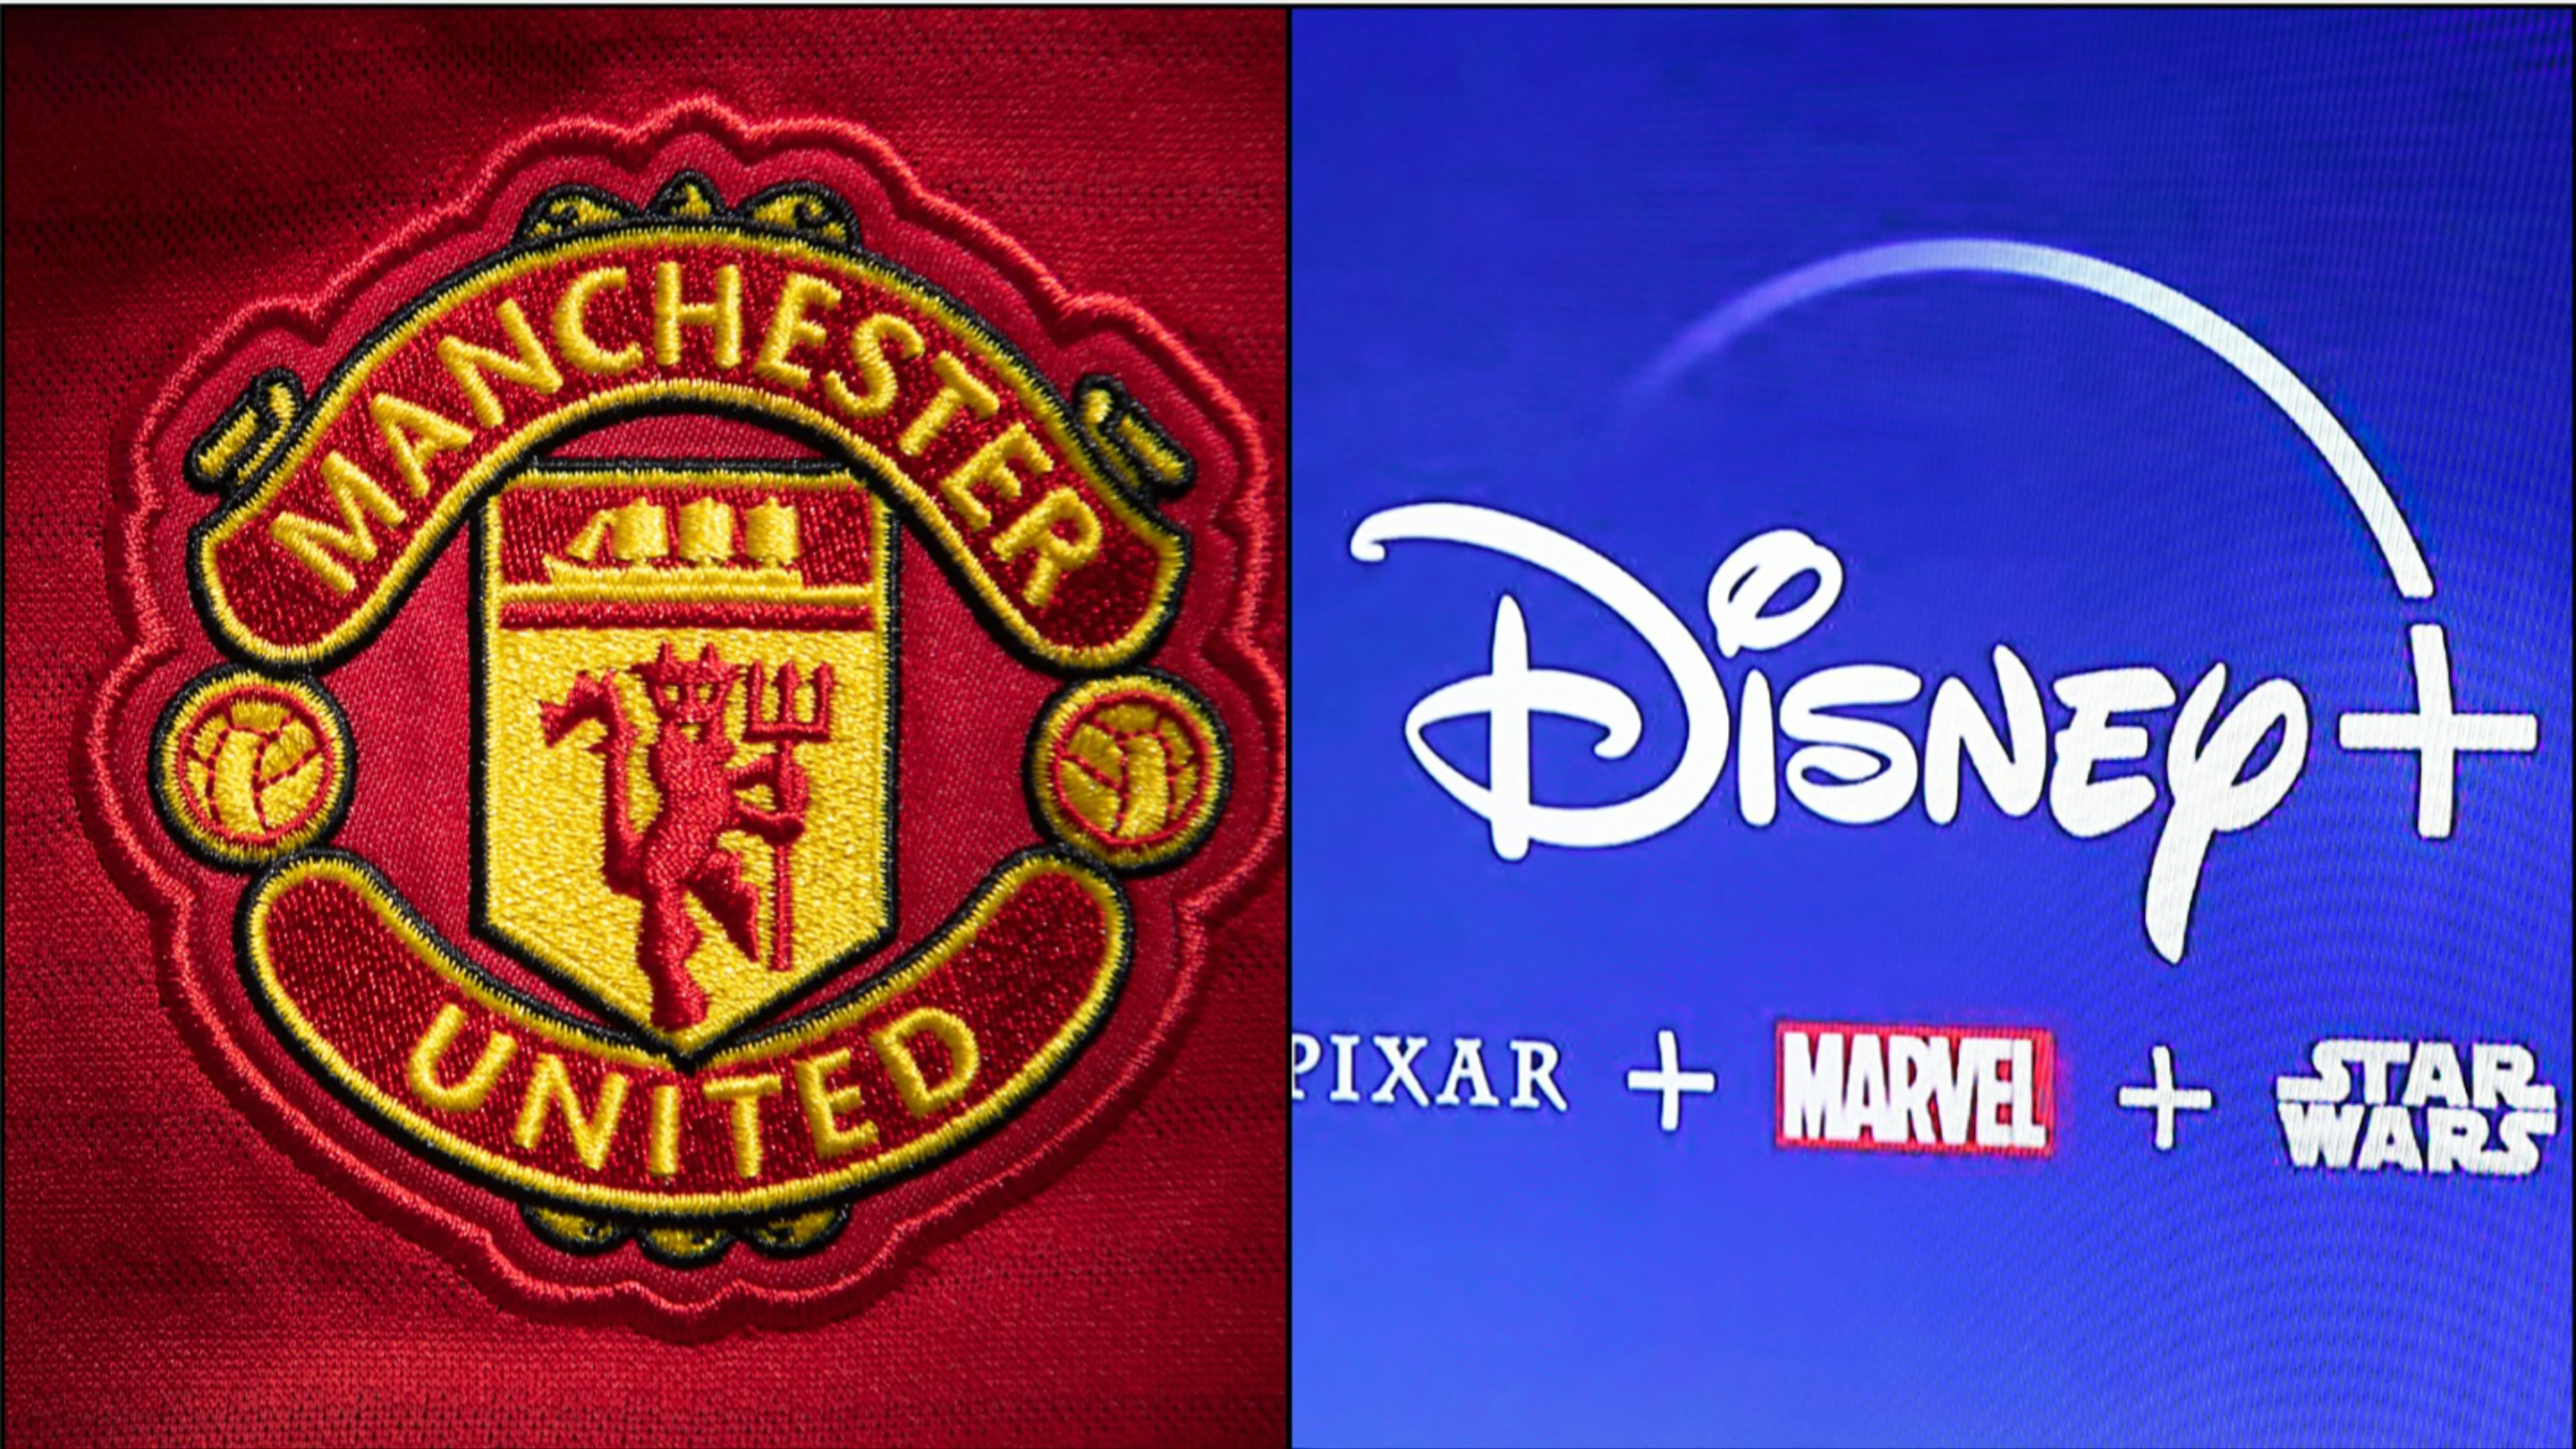 Man Utd in talks over 'multi-million dollar' Disney documentary